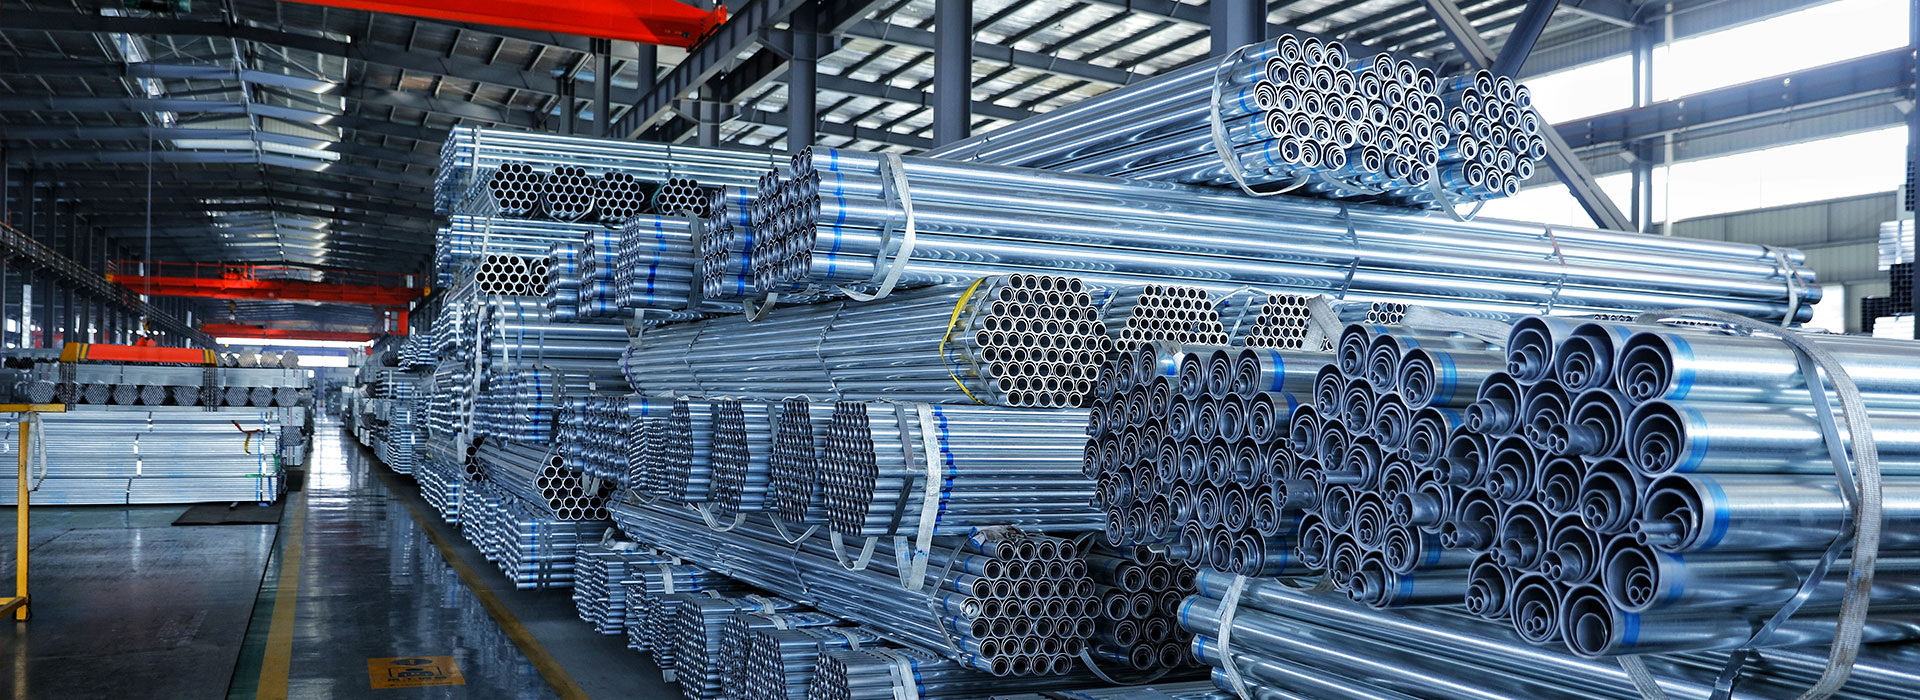 Building Material 300*300Mm Carbon Steel Tube Manufacturer